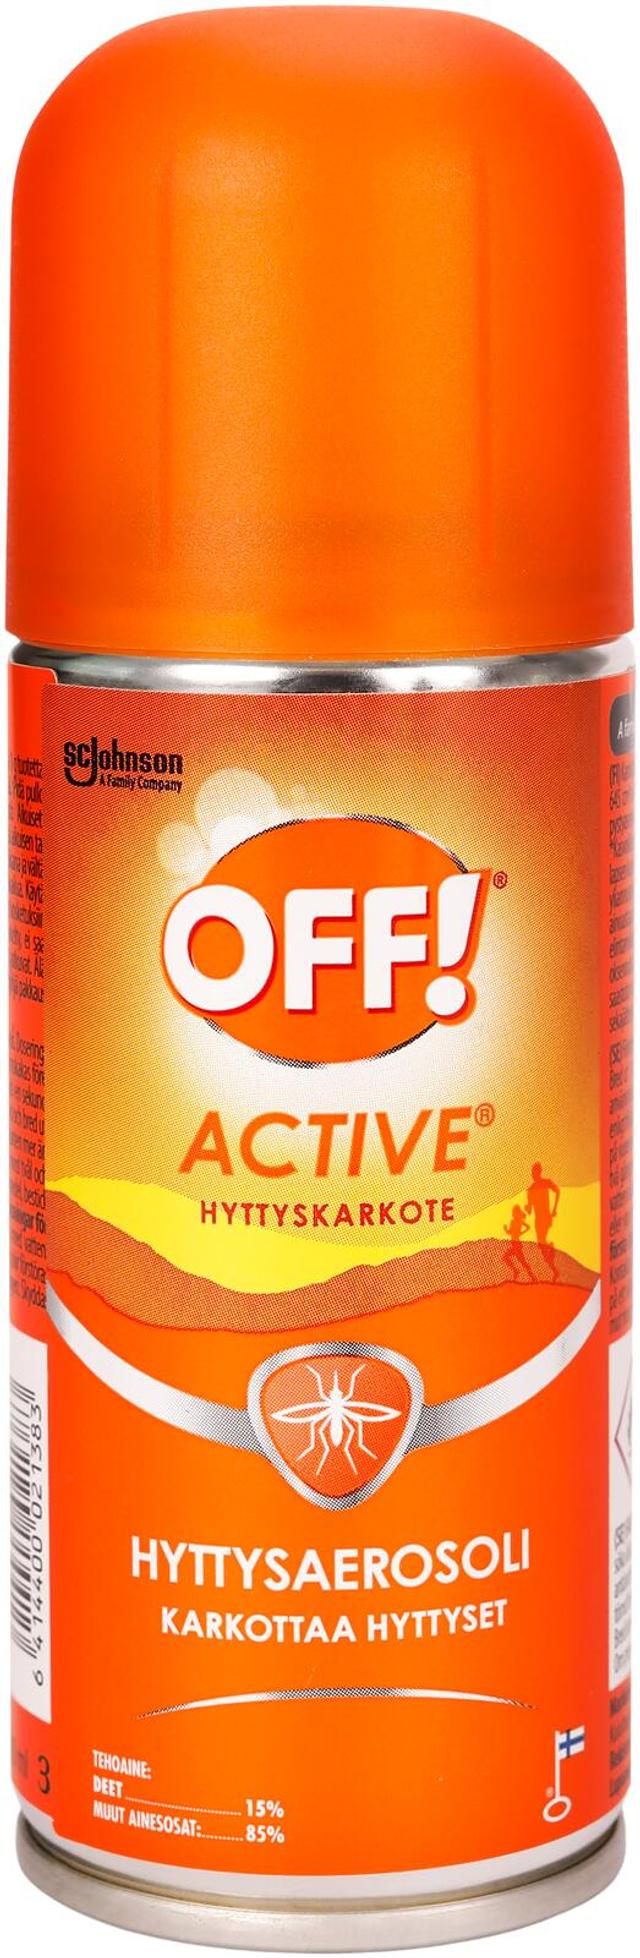 OFF! 100 ml Active hyttysaerosoli